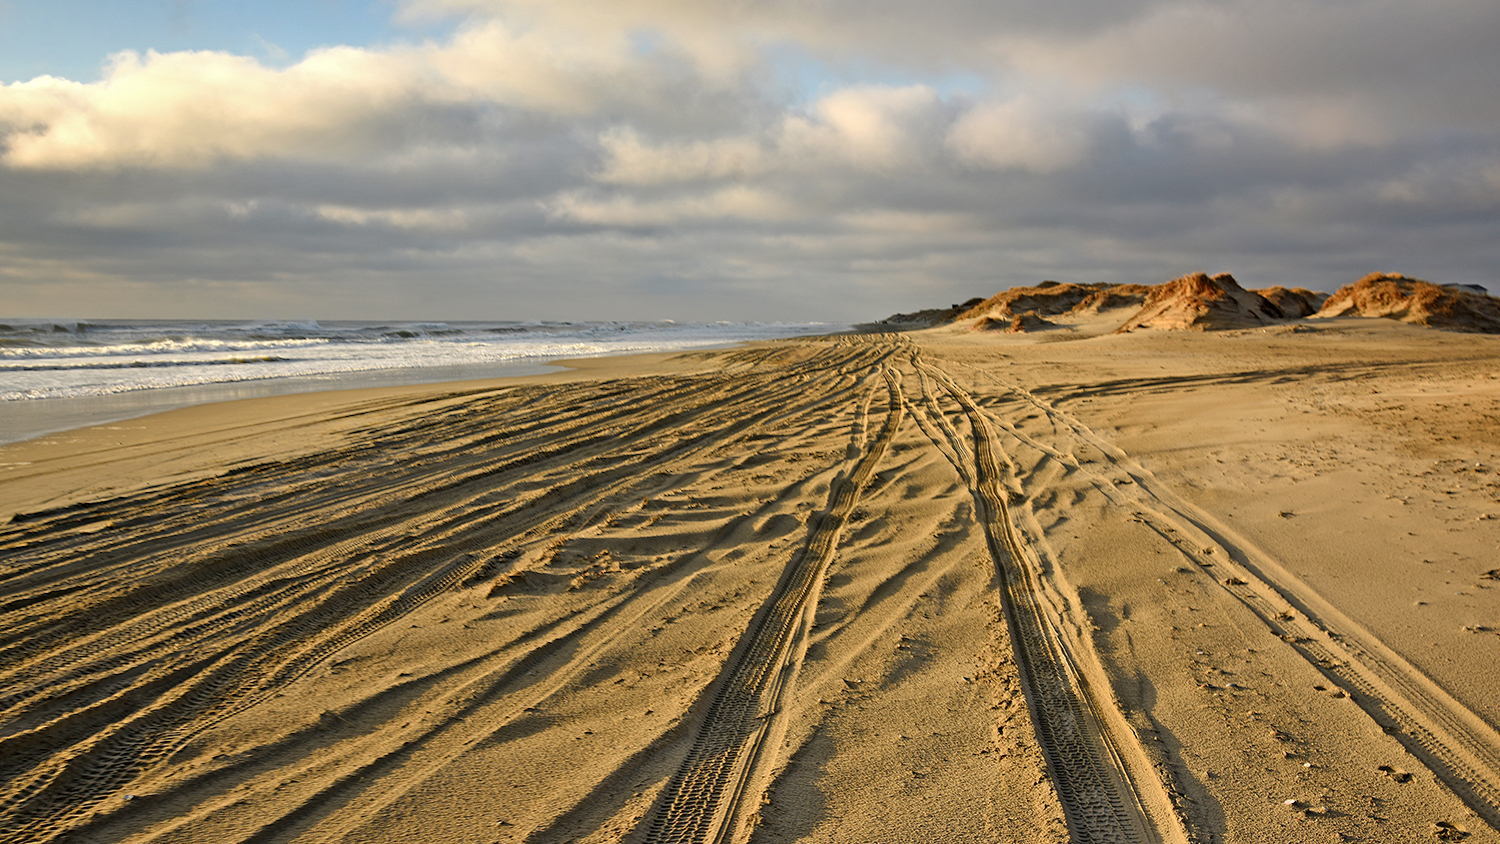 Tracks run along the sandy beach on the "road" to Carova.